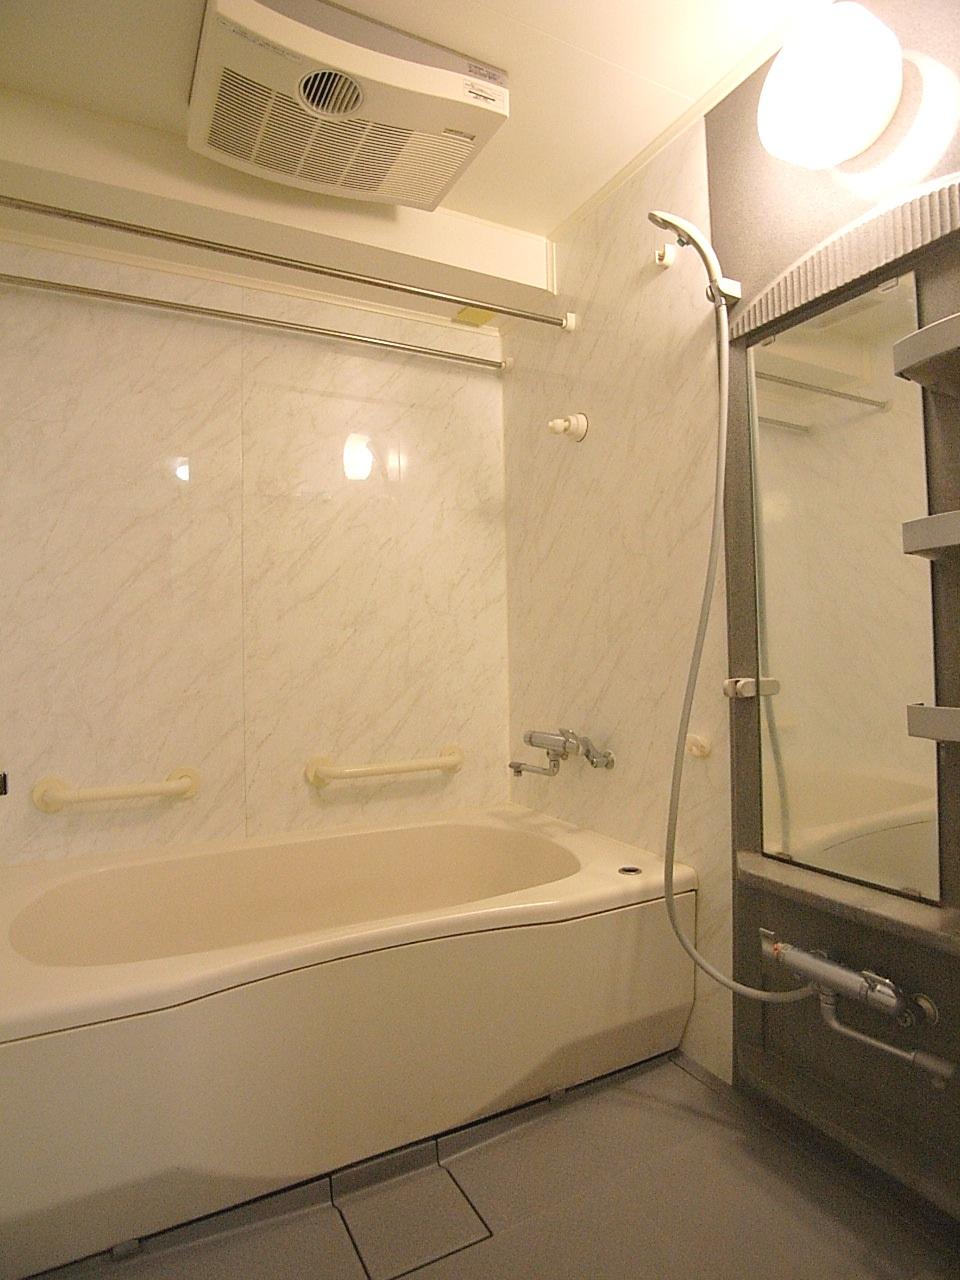 Bathroom. 1418 size unit bus. With bathroom dryer (December 2013) Shooting